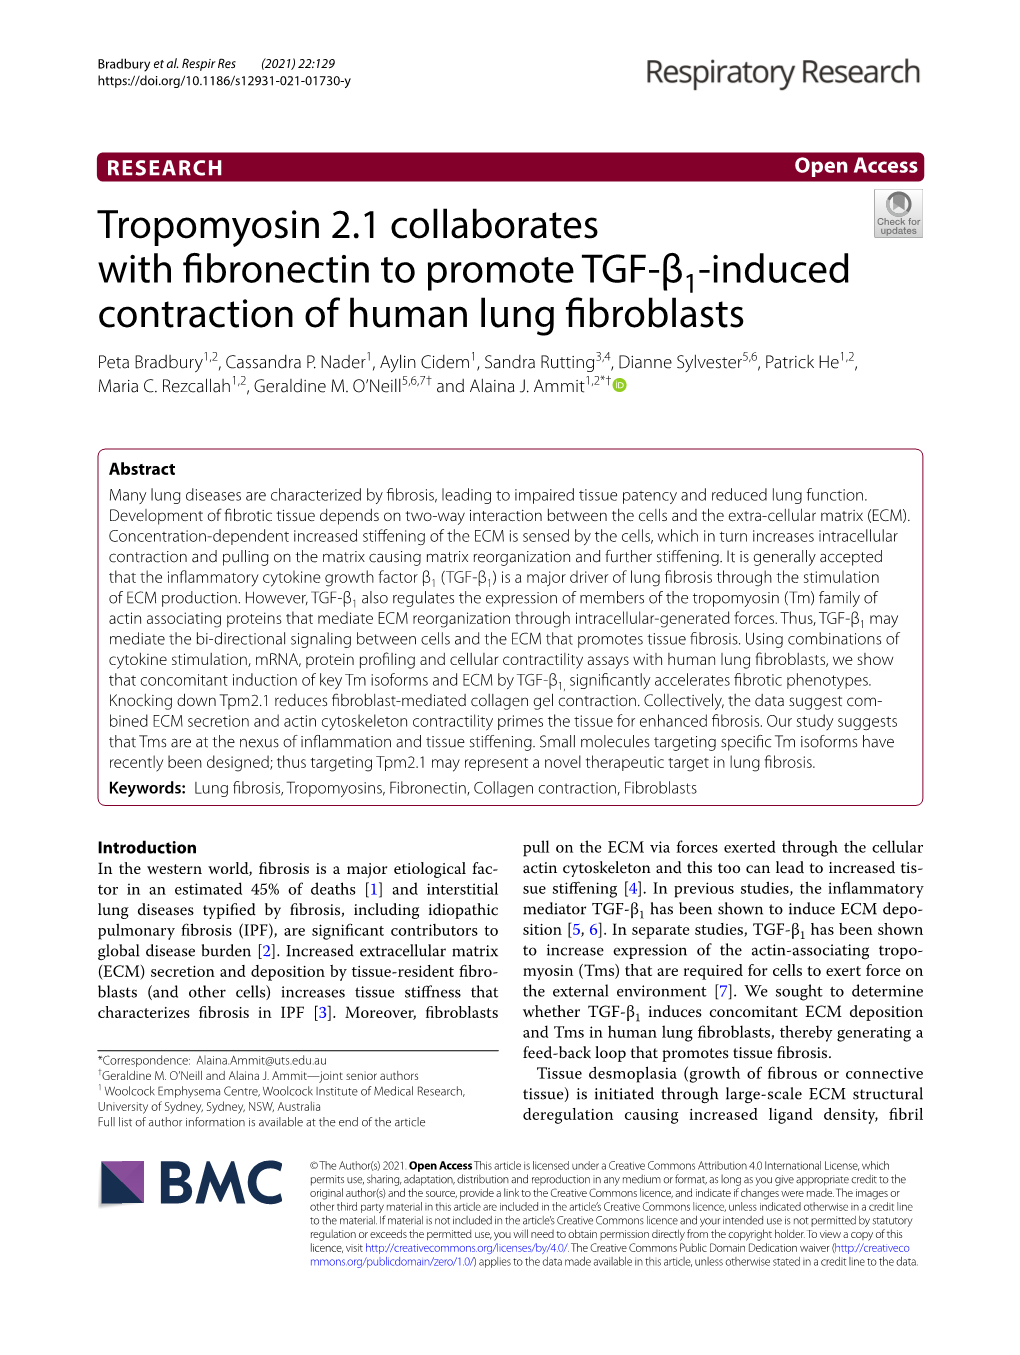 Tropomyosin 2.1 Collaborates with Fibronectin to Promote TGF-Β